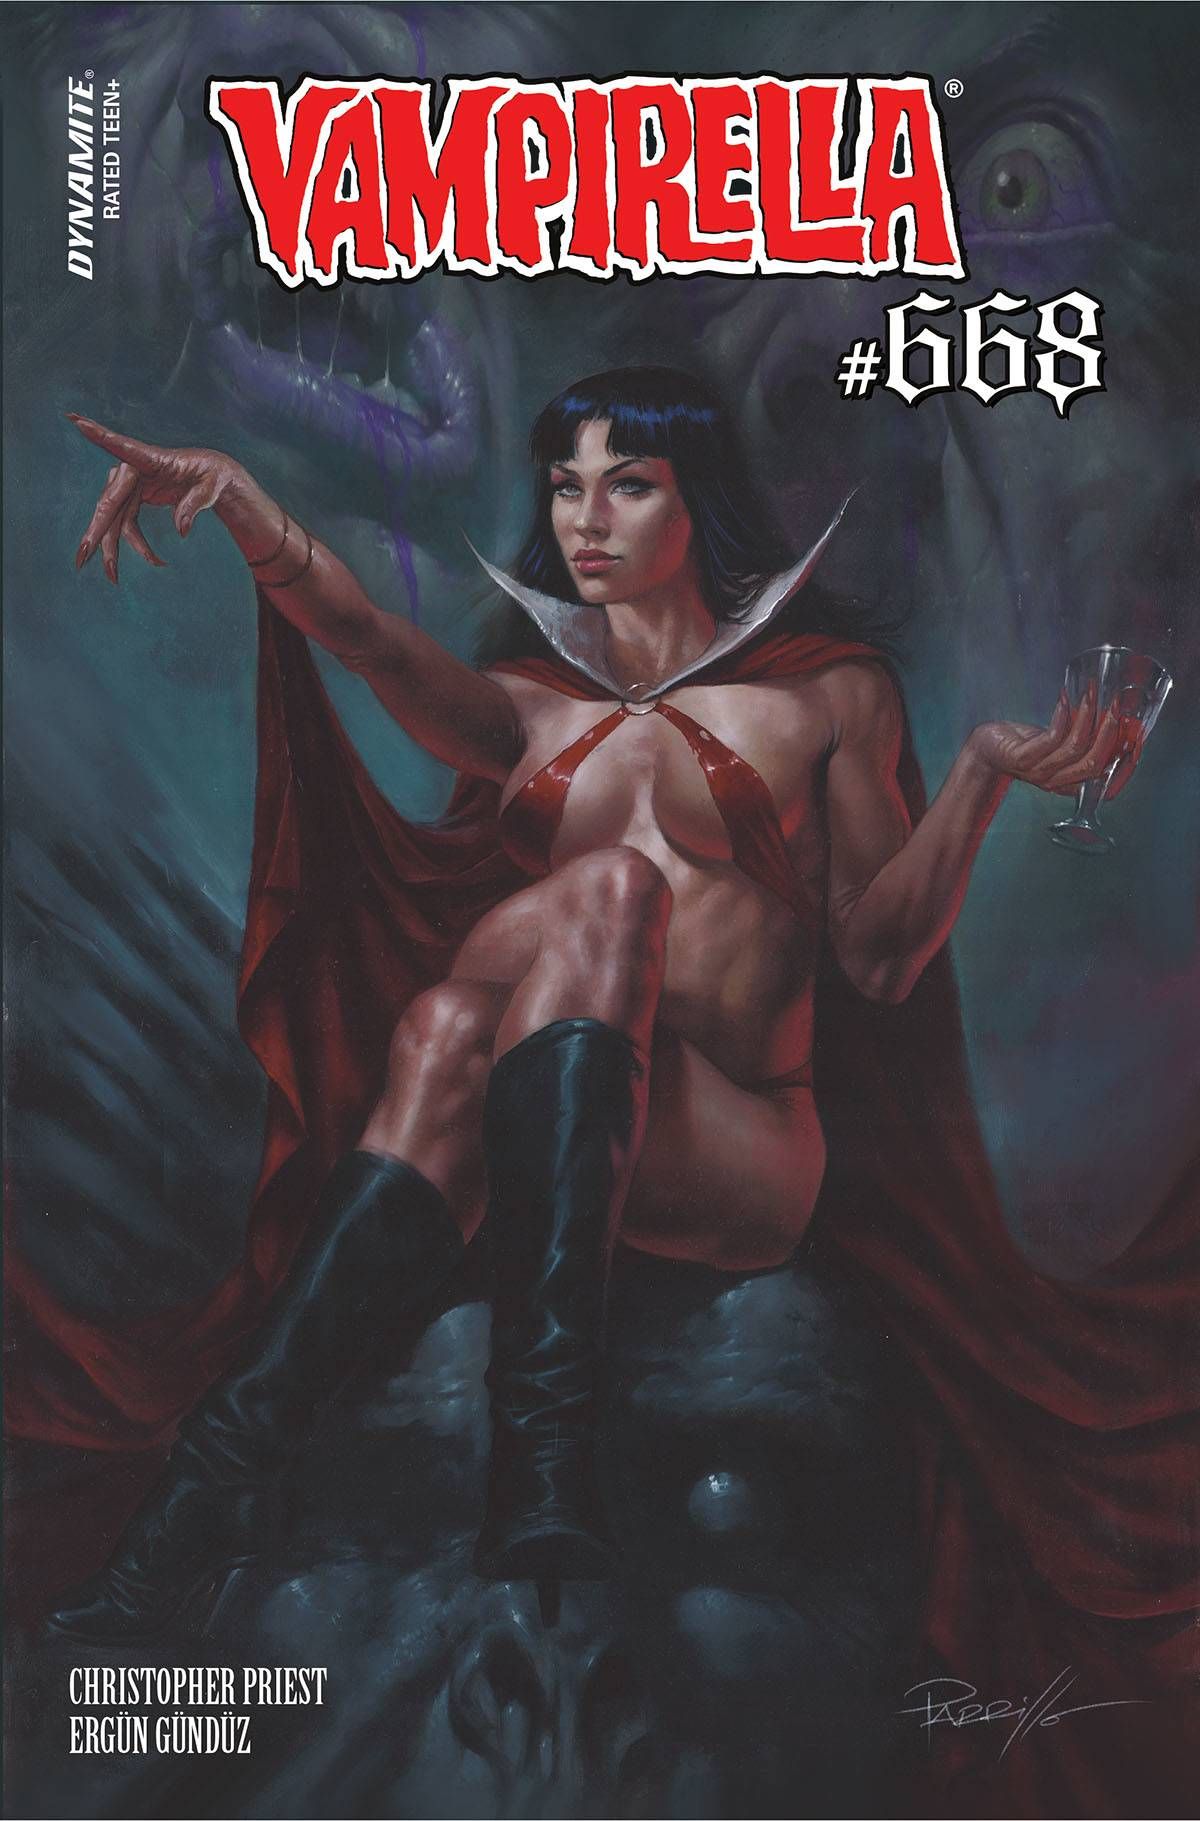 Vampirella #668 Comic